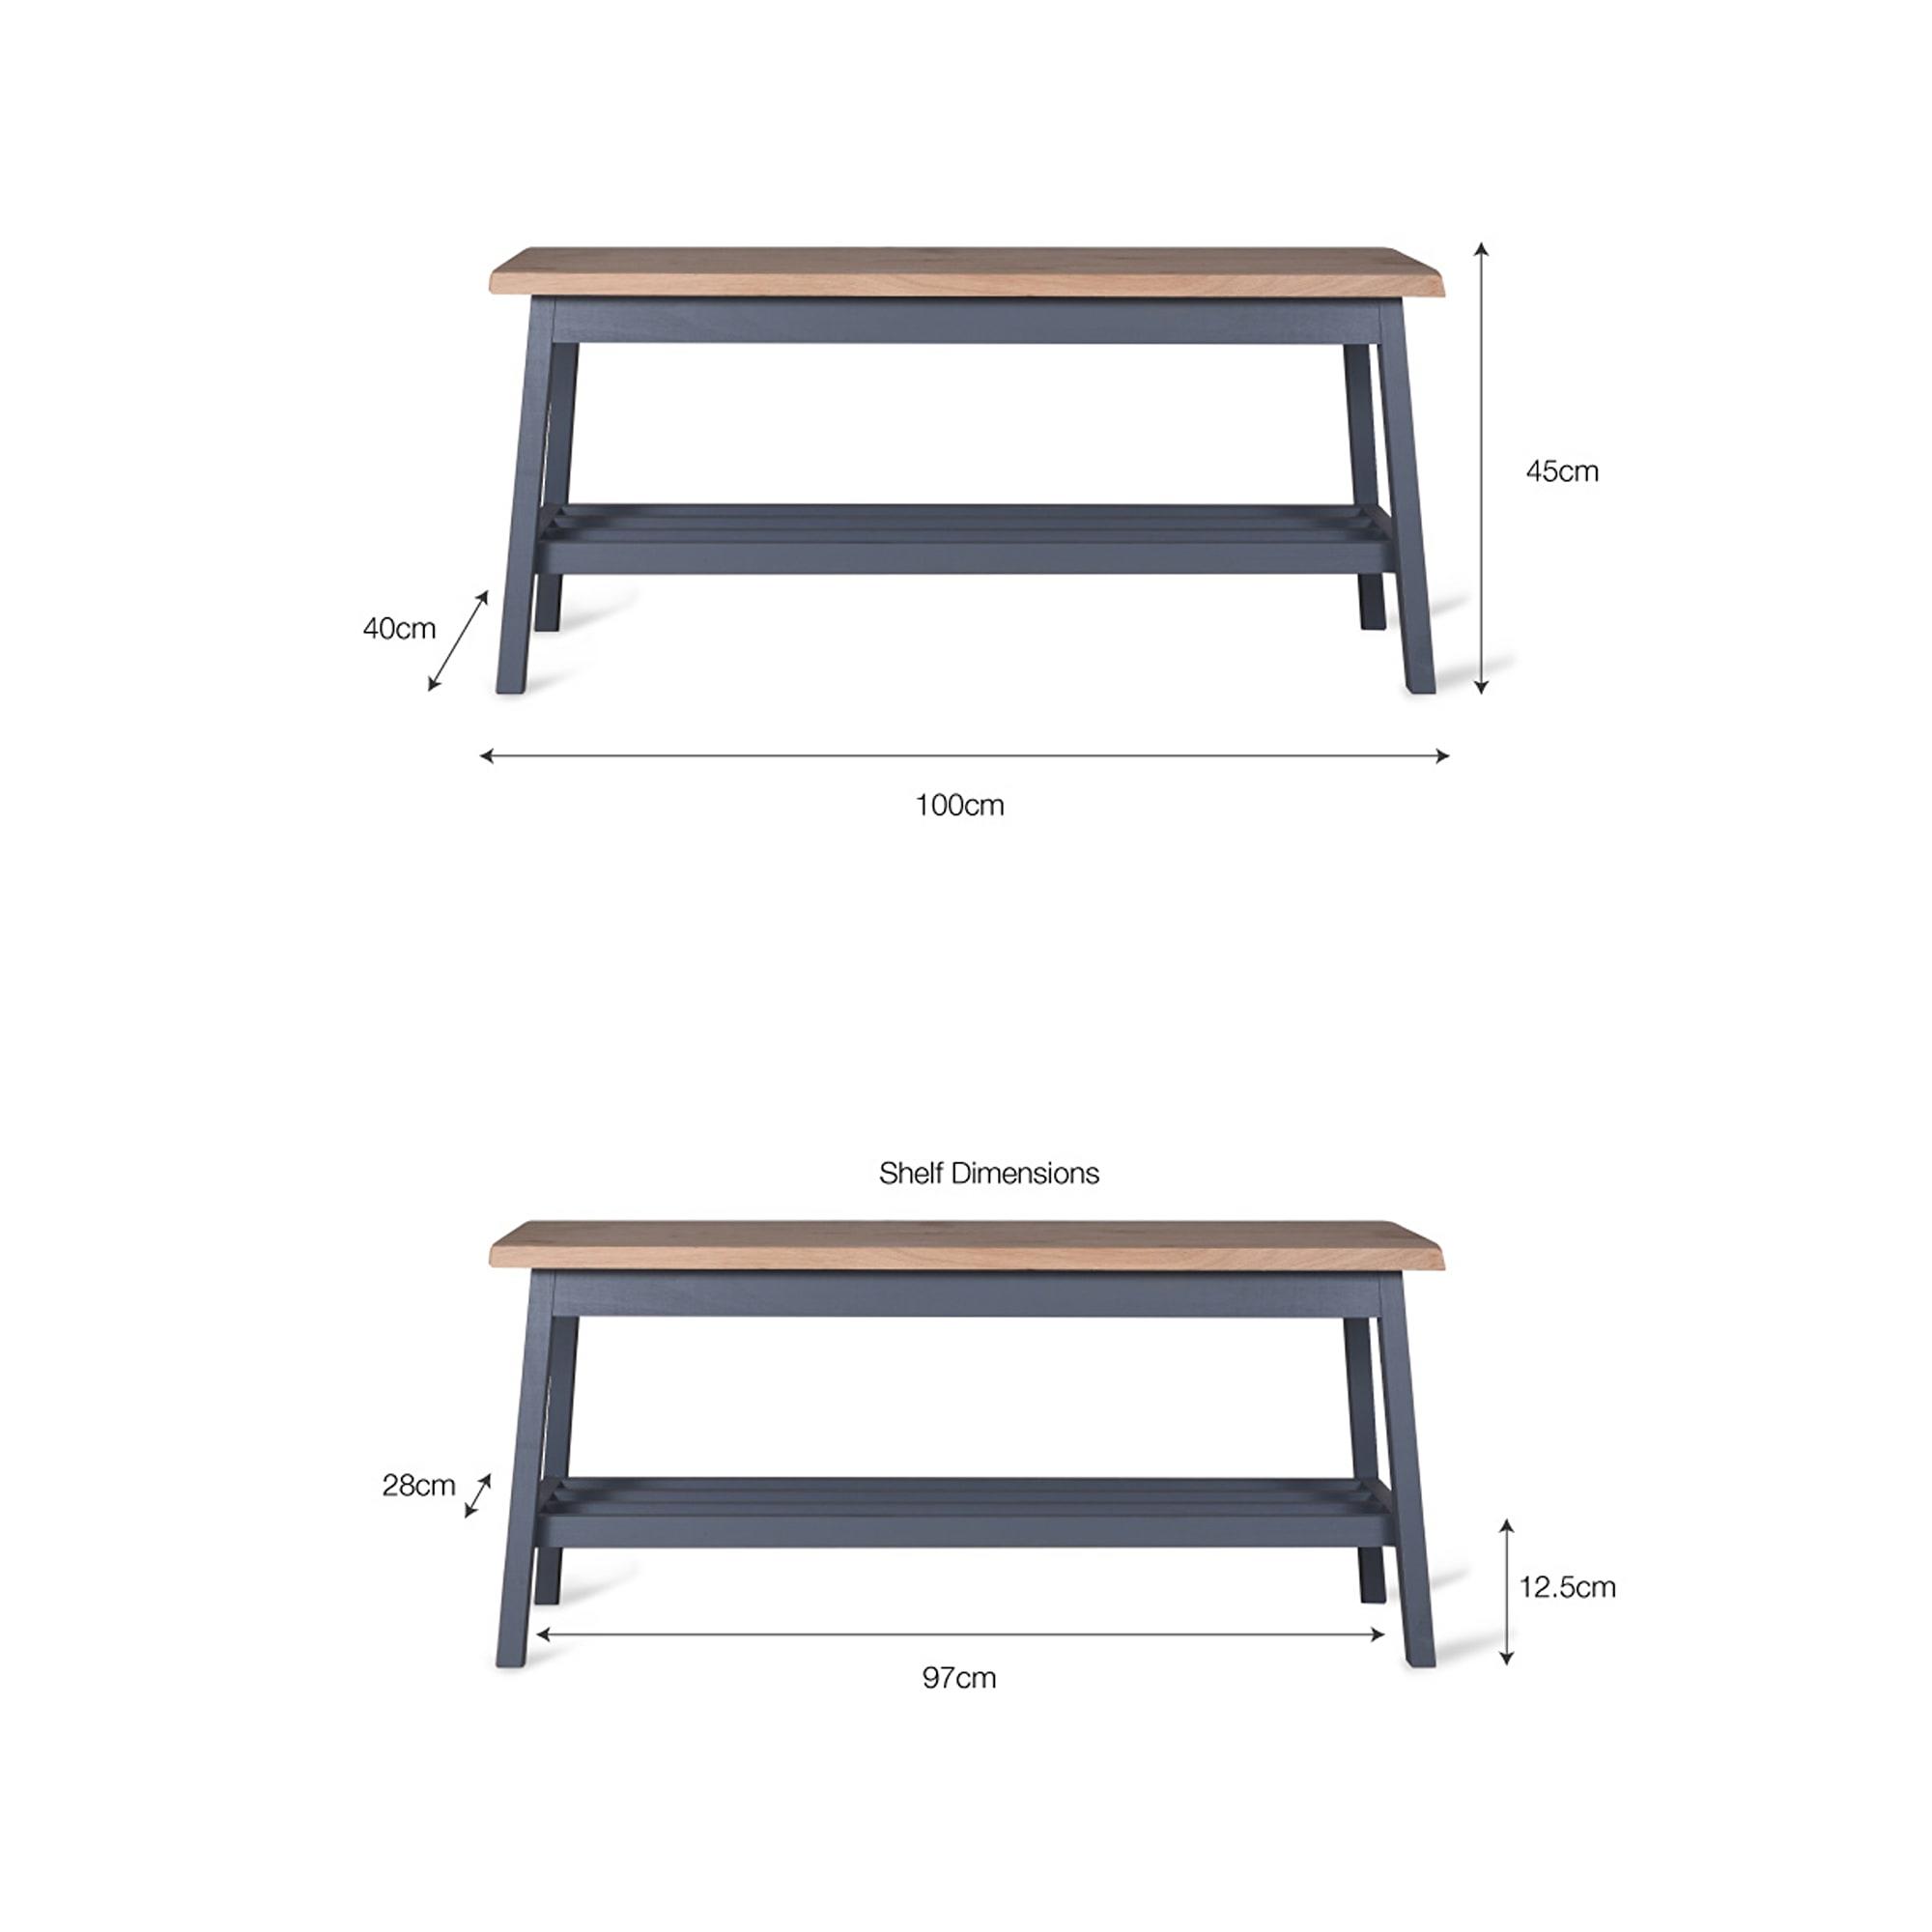 dimensions of painted blue-grey indoor hallway bench in beech wood and oak veneer